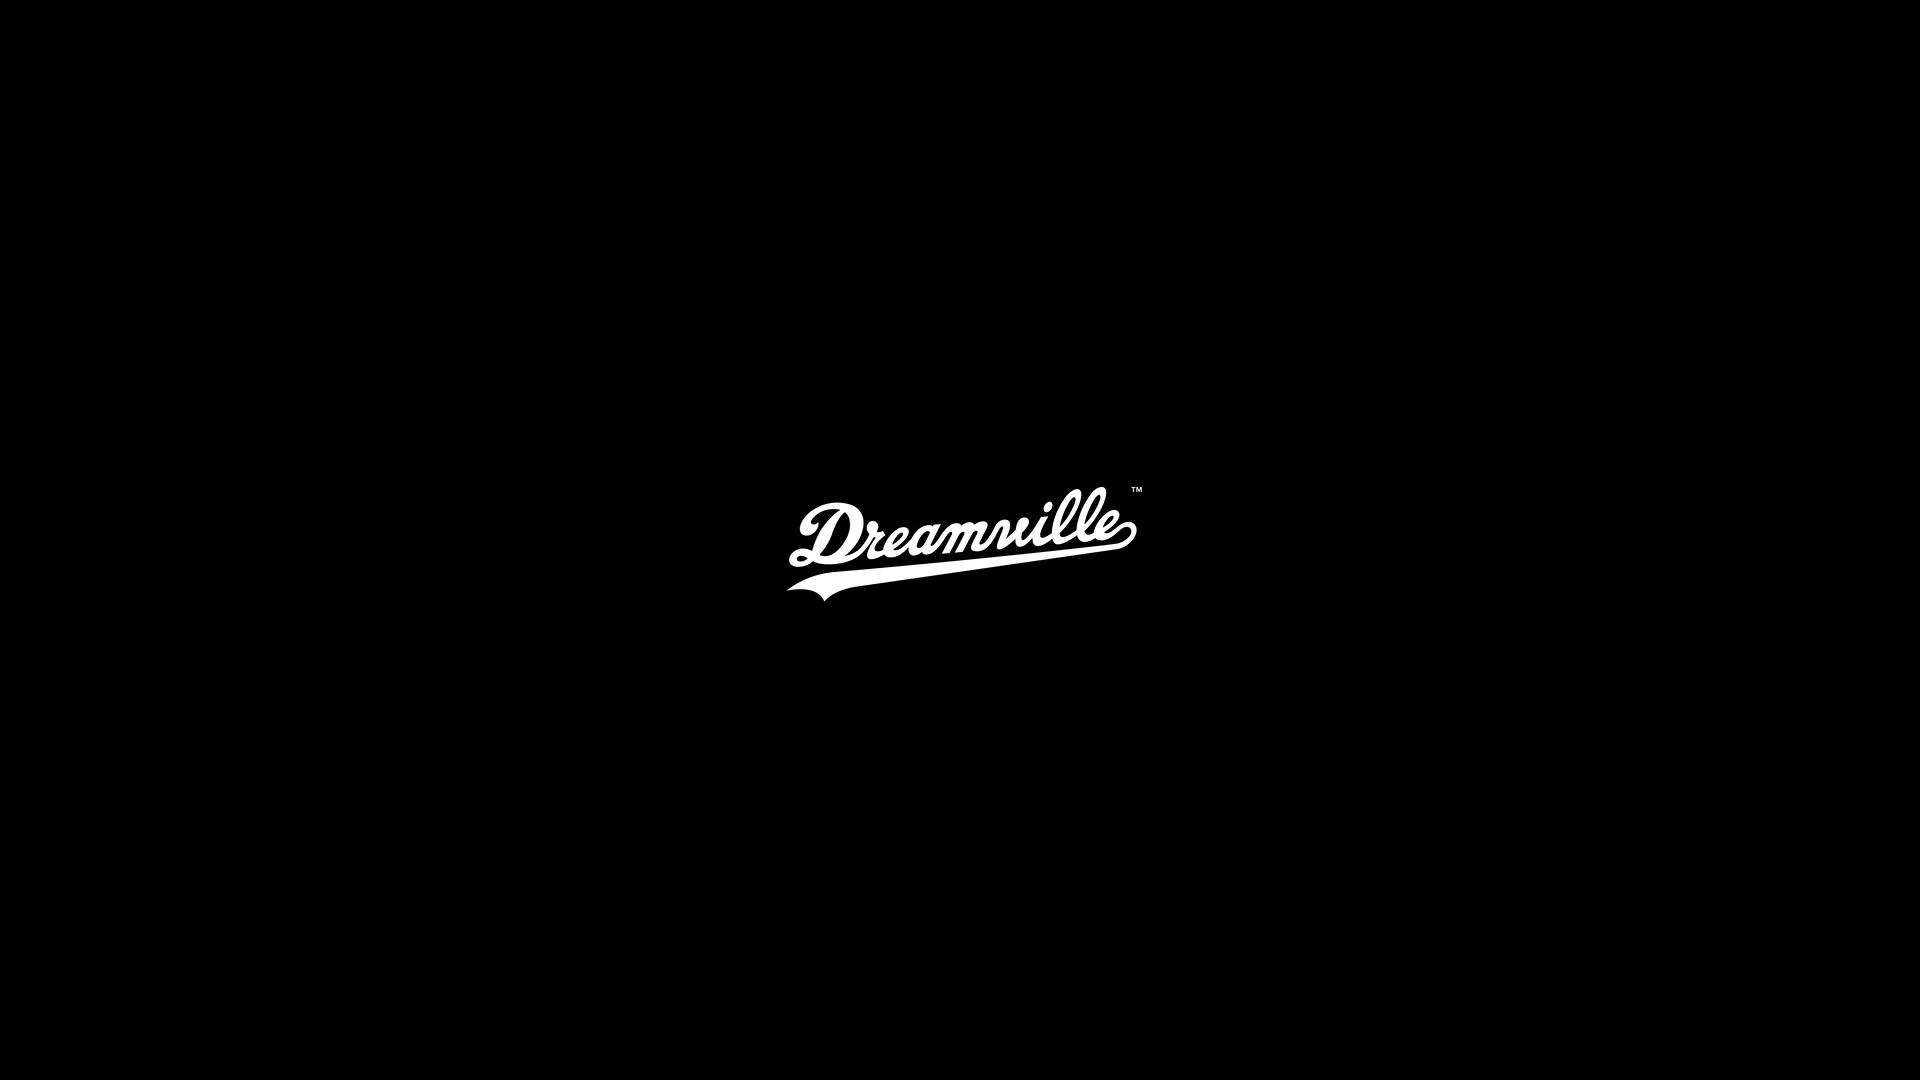 DreamVille Logo - Dreamville